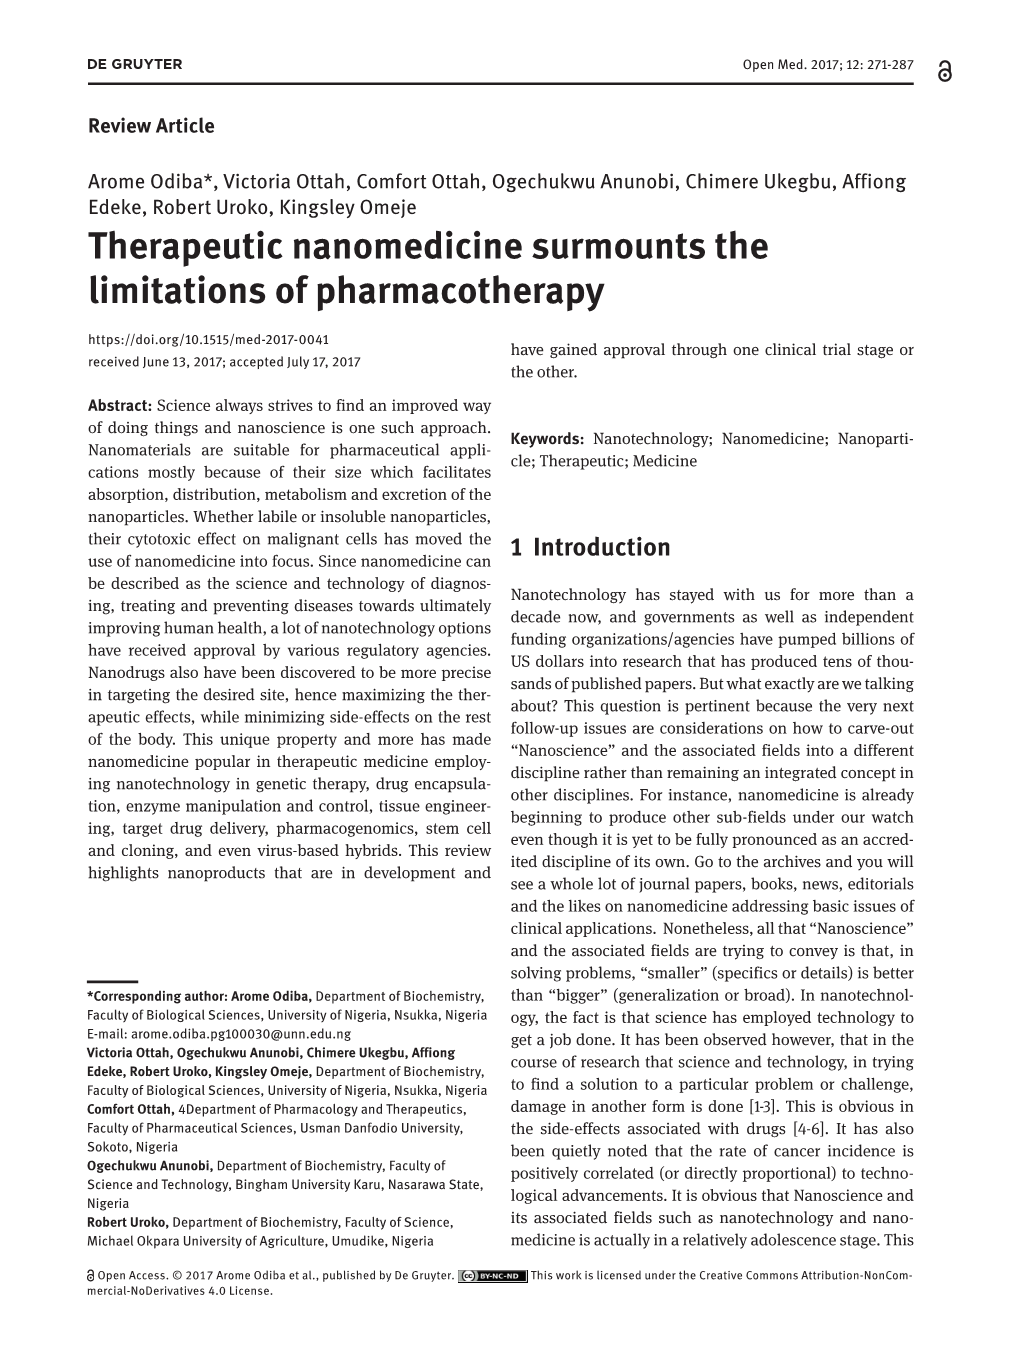 Therapeutic Nanomedicine Surmounts the Limitations of Pharmacotherapy